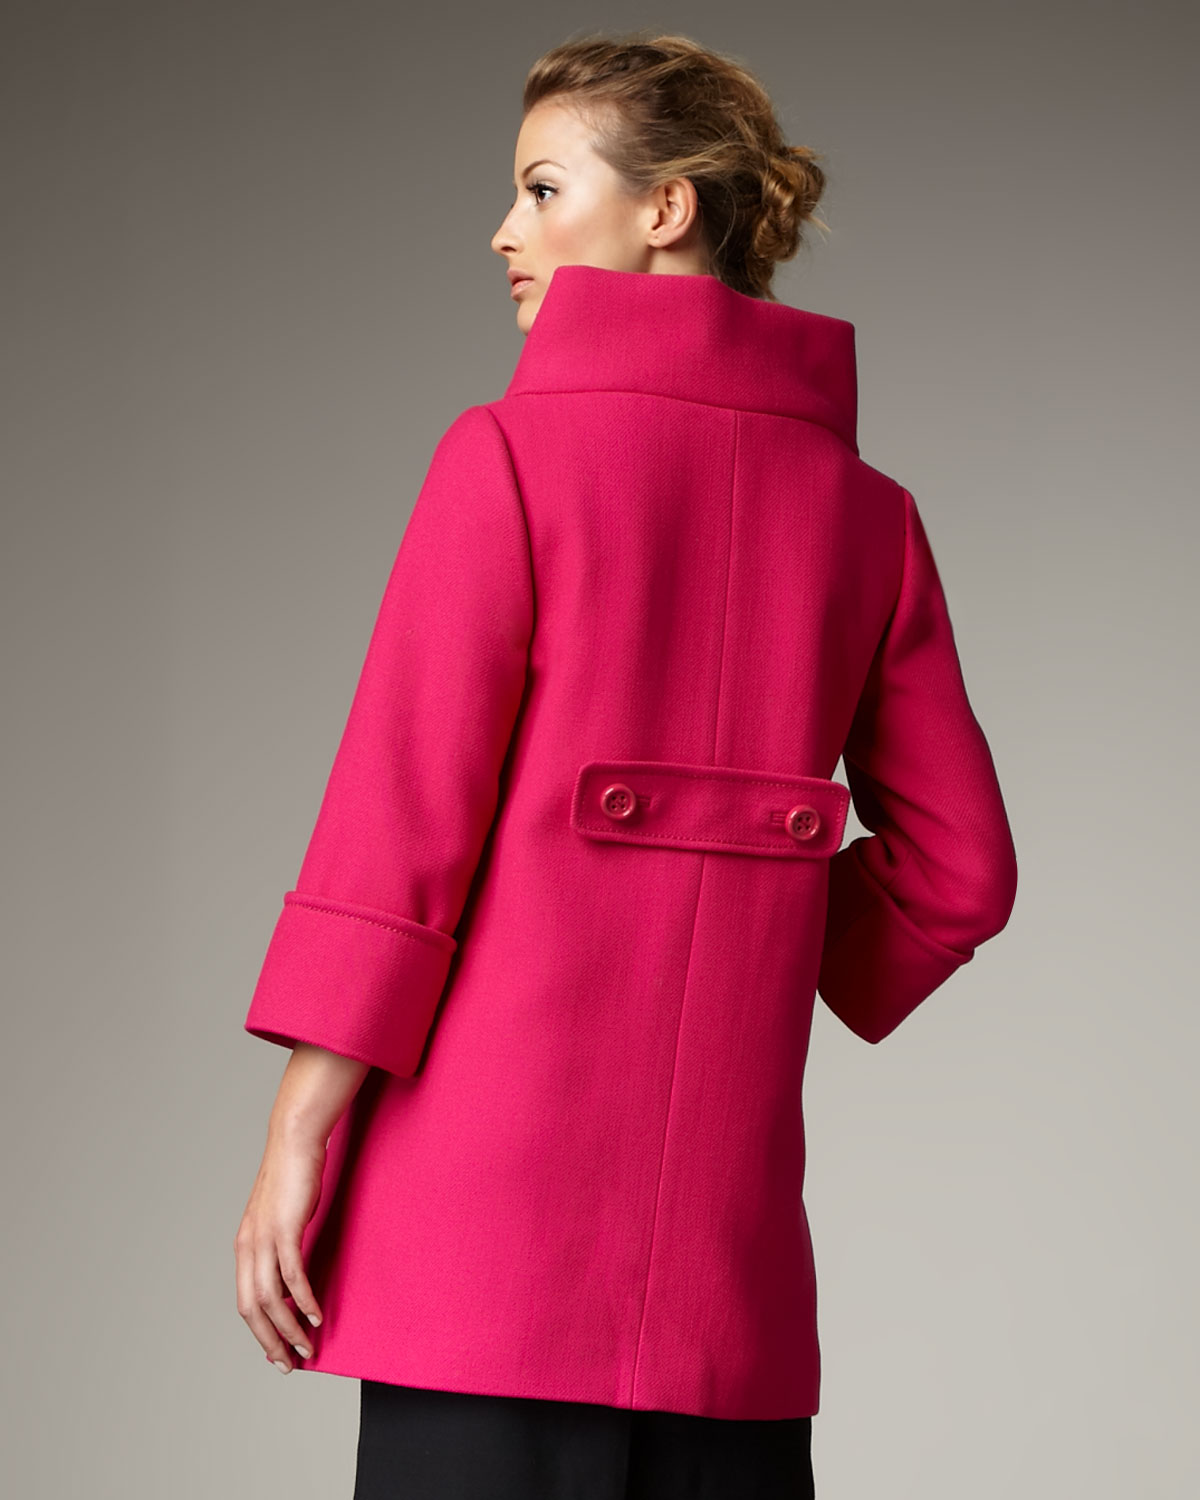 Lyst - Kate Spade New York Cherie Three-quarter-sleeve Coat in Pink